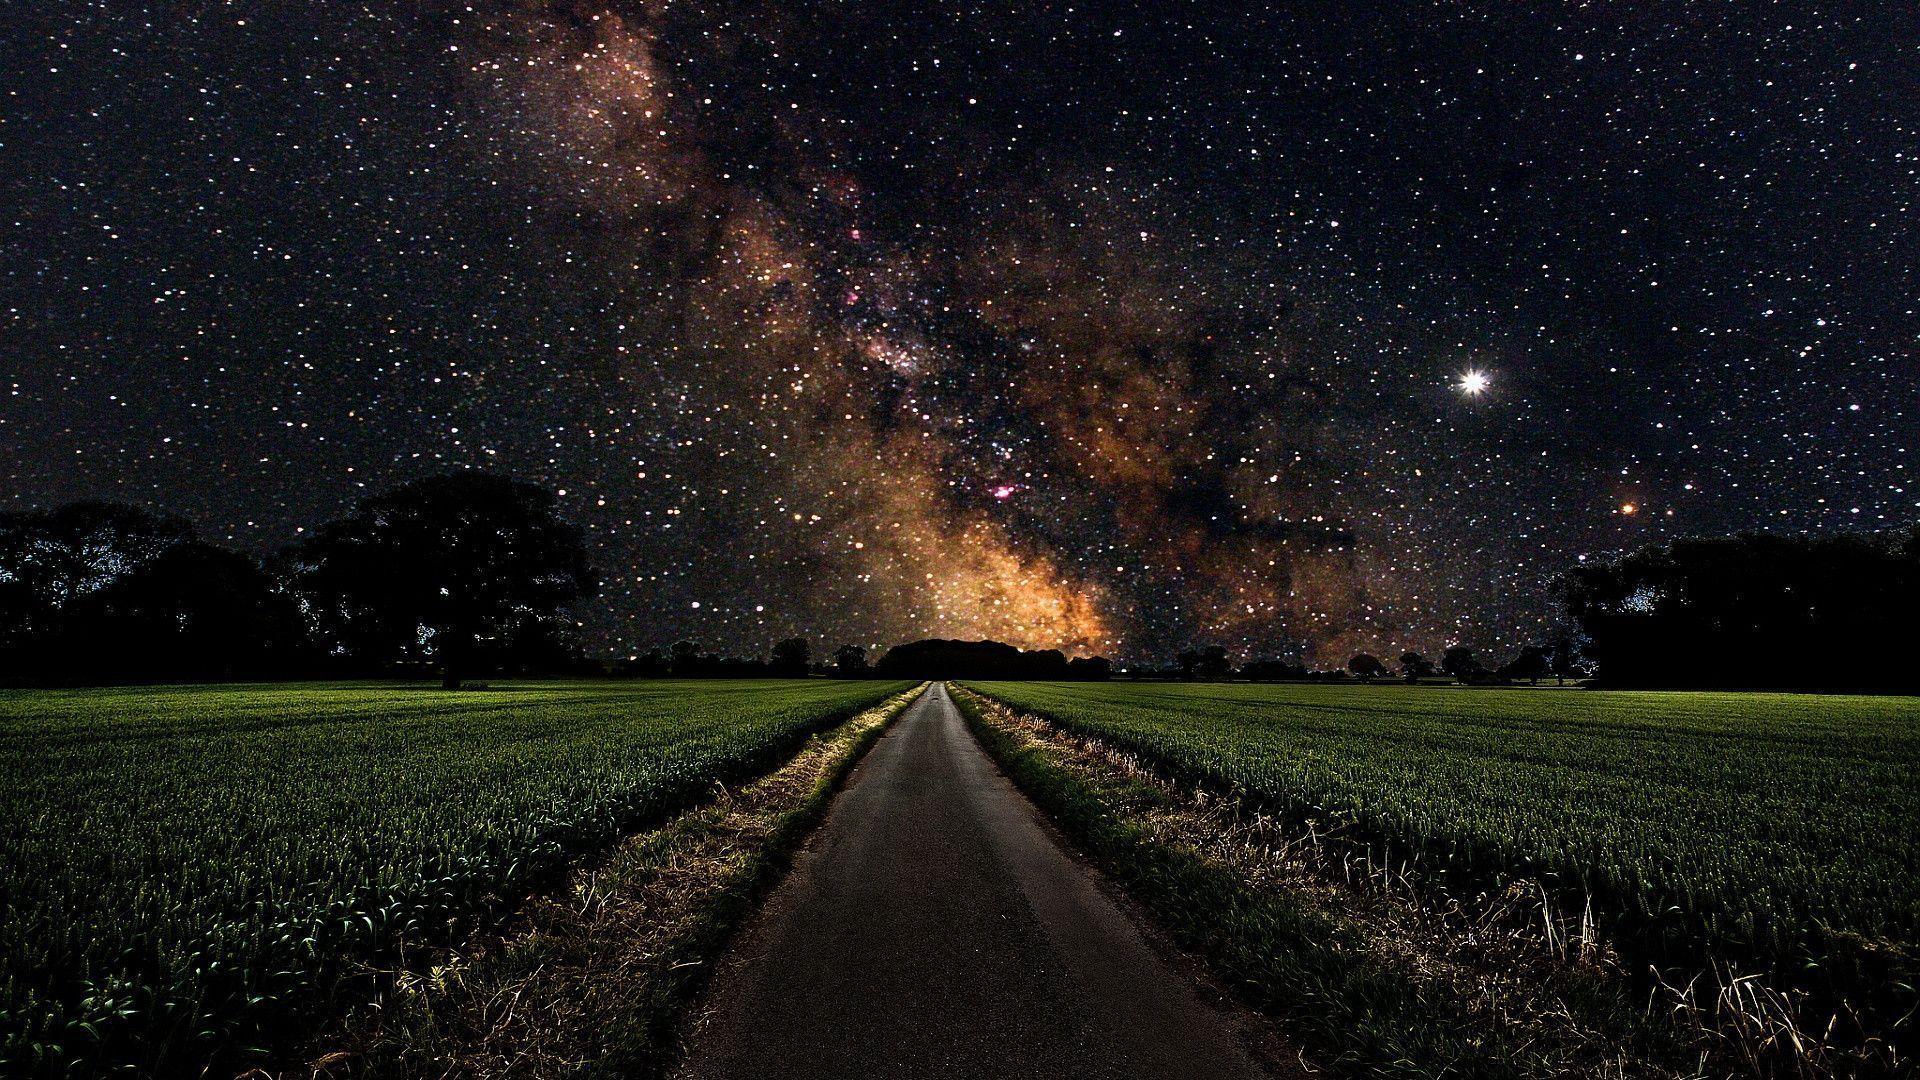 Milky Way over a green field wallpaper